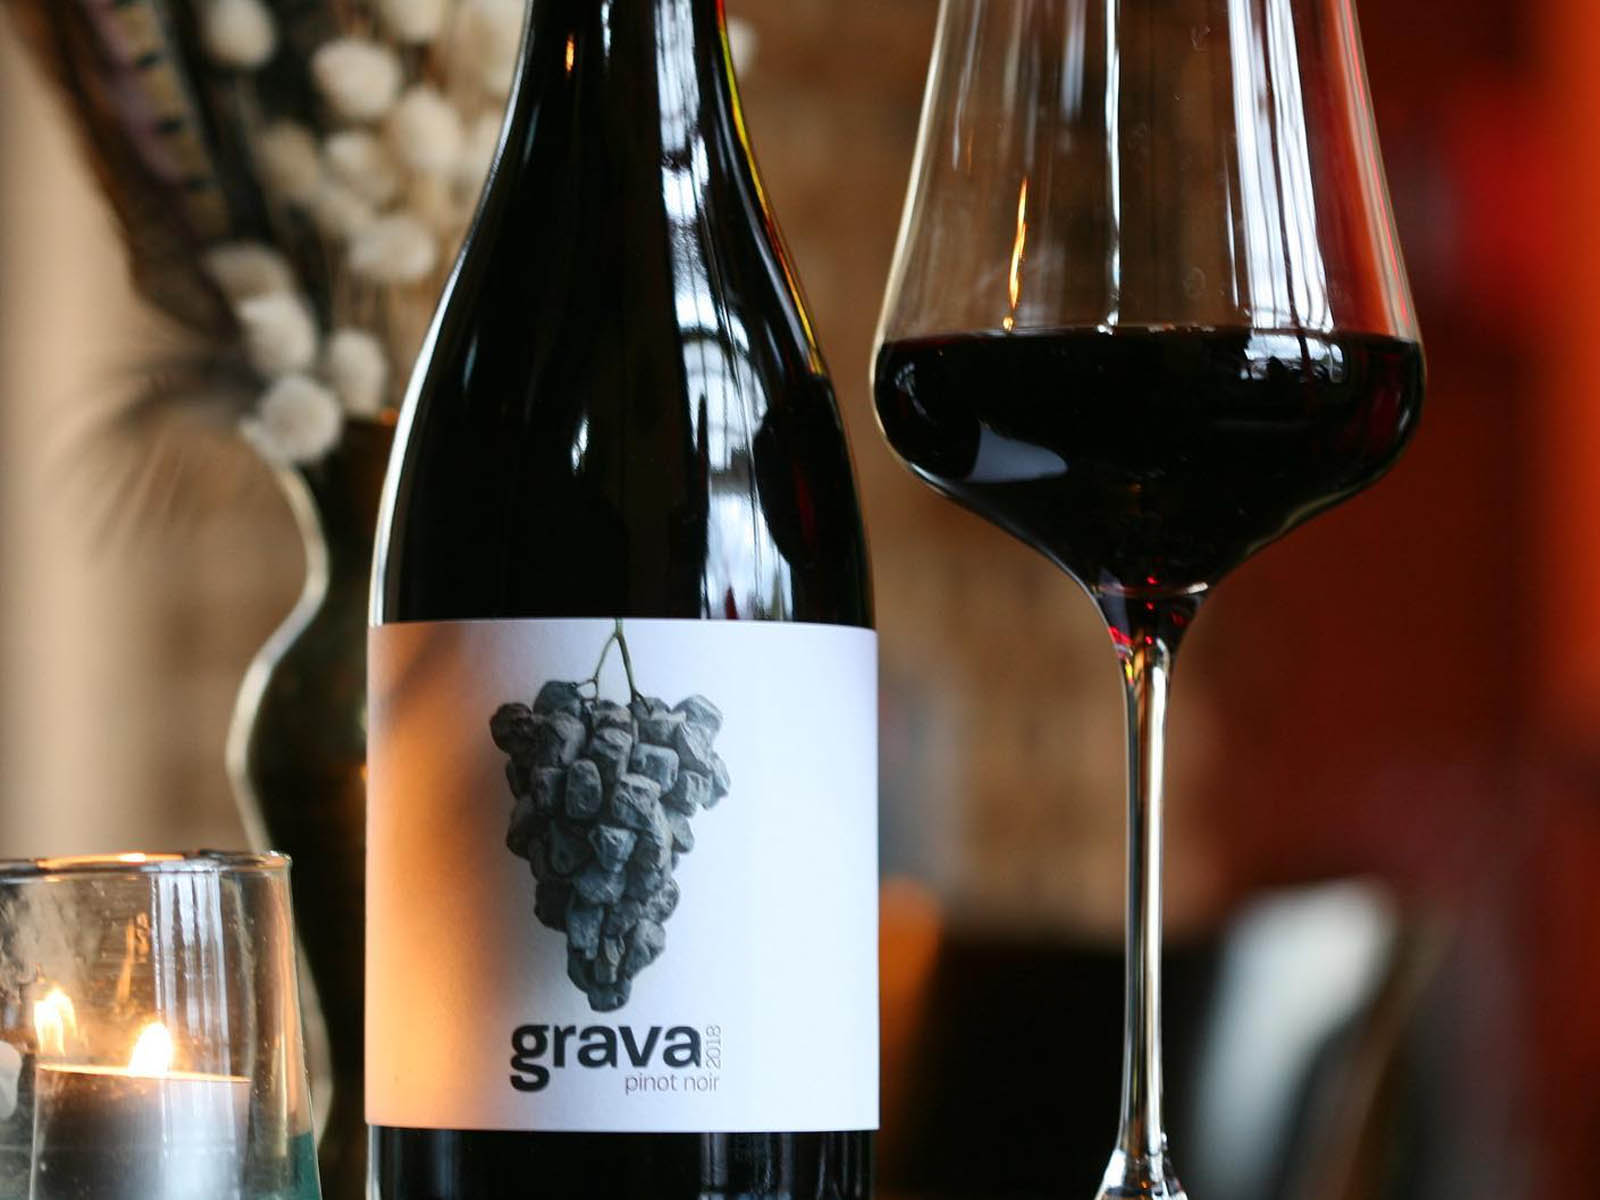 Photo shows Grava wine bottle.